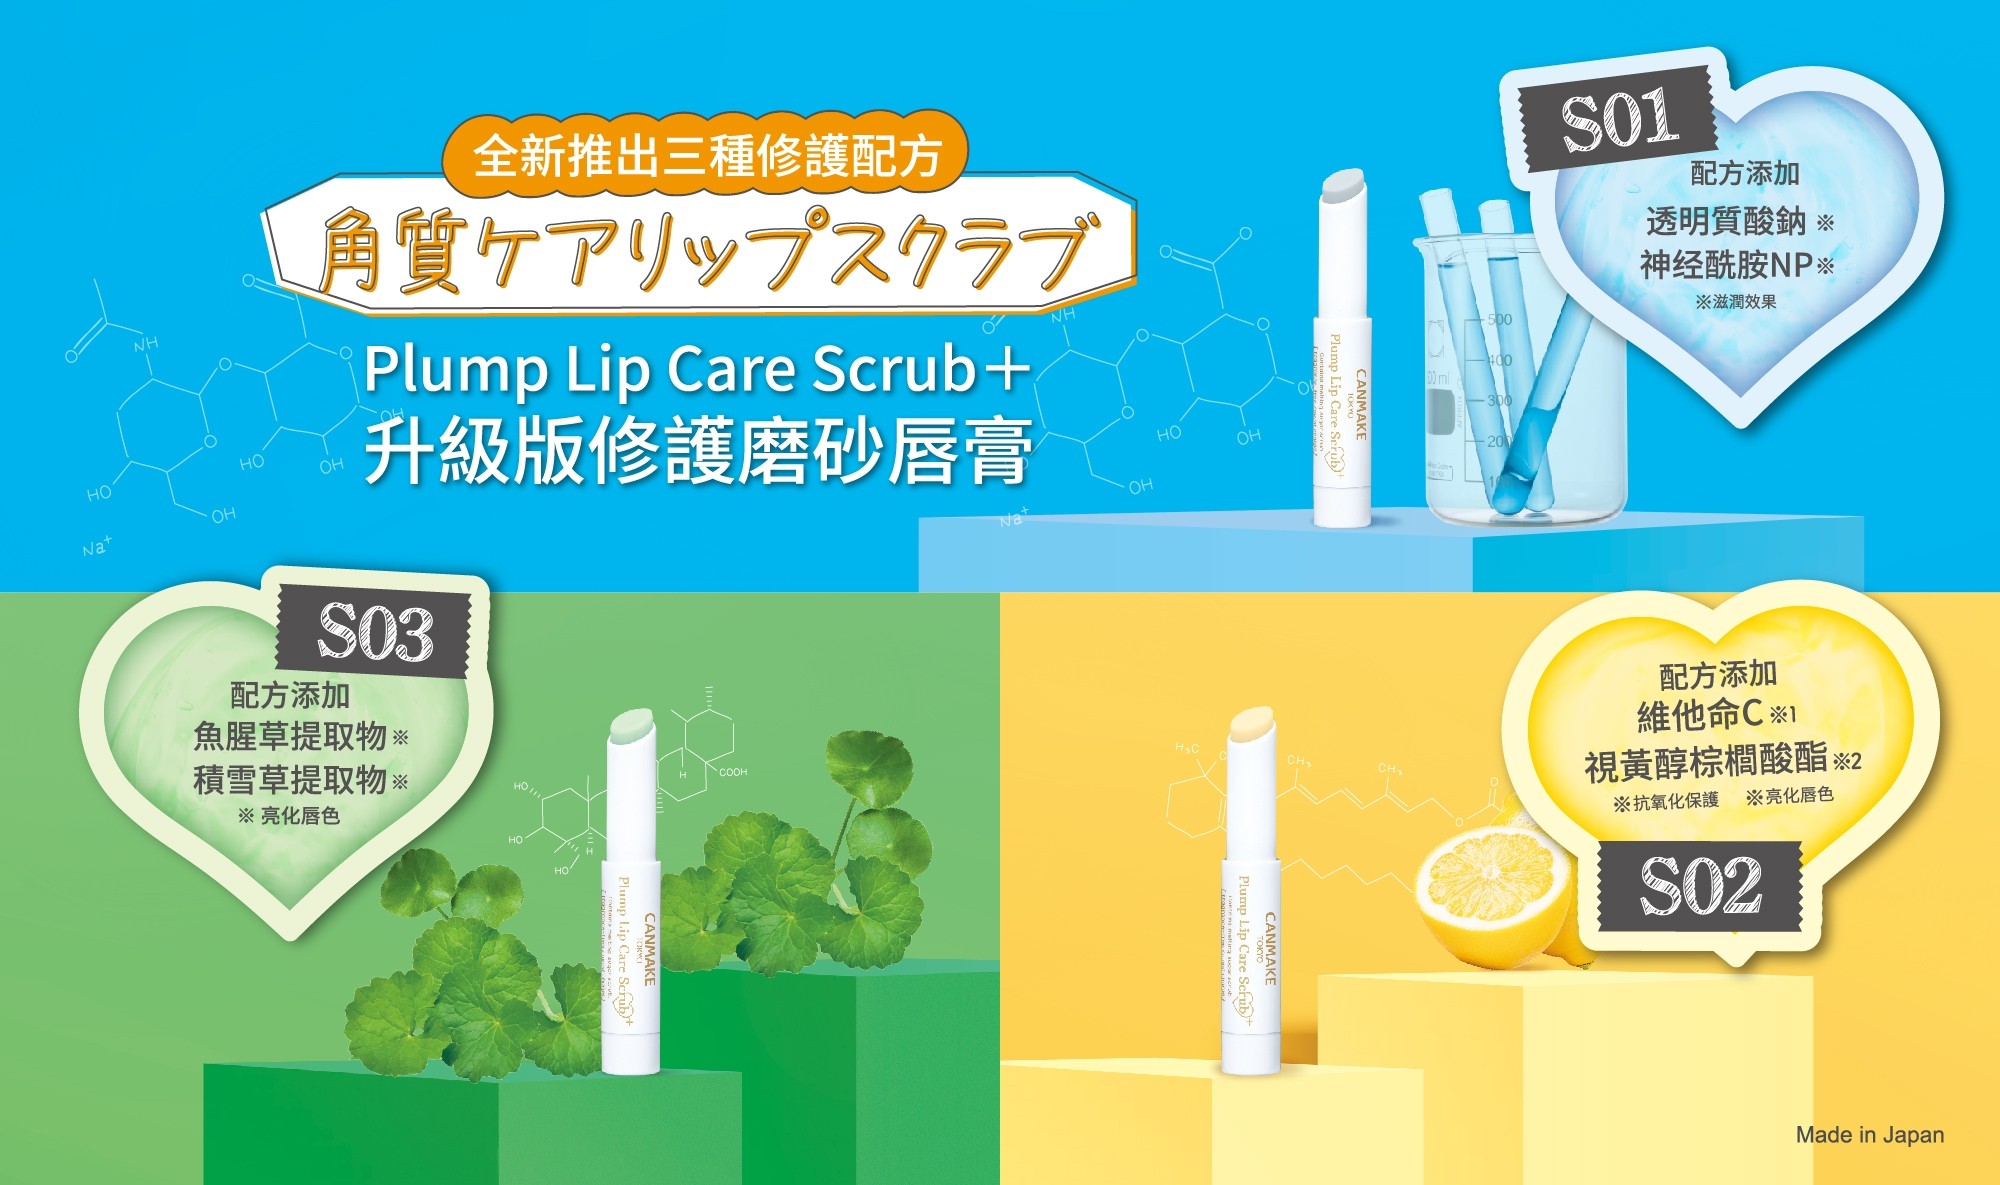 Plump Lip Care Scrub